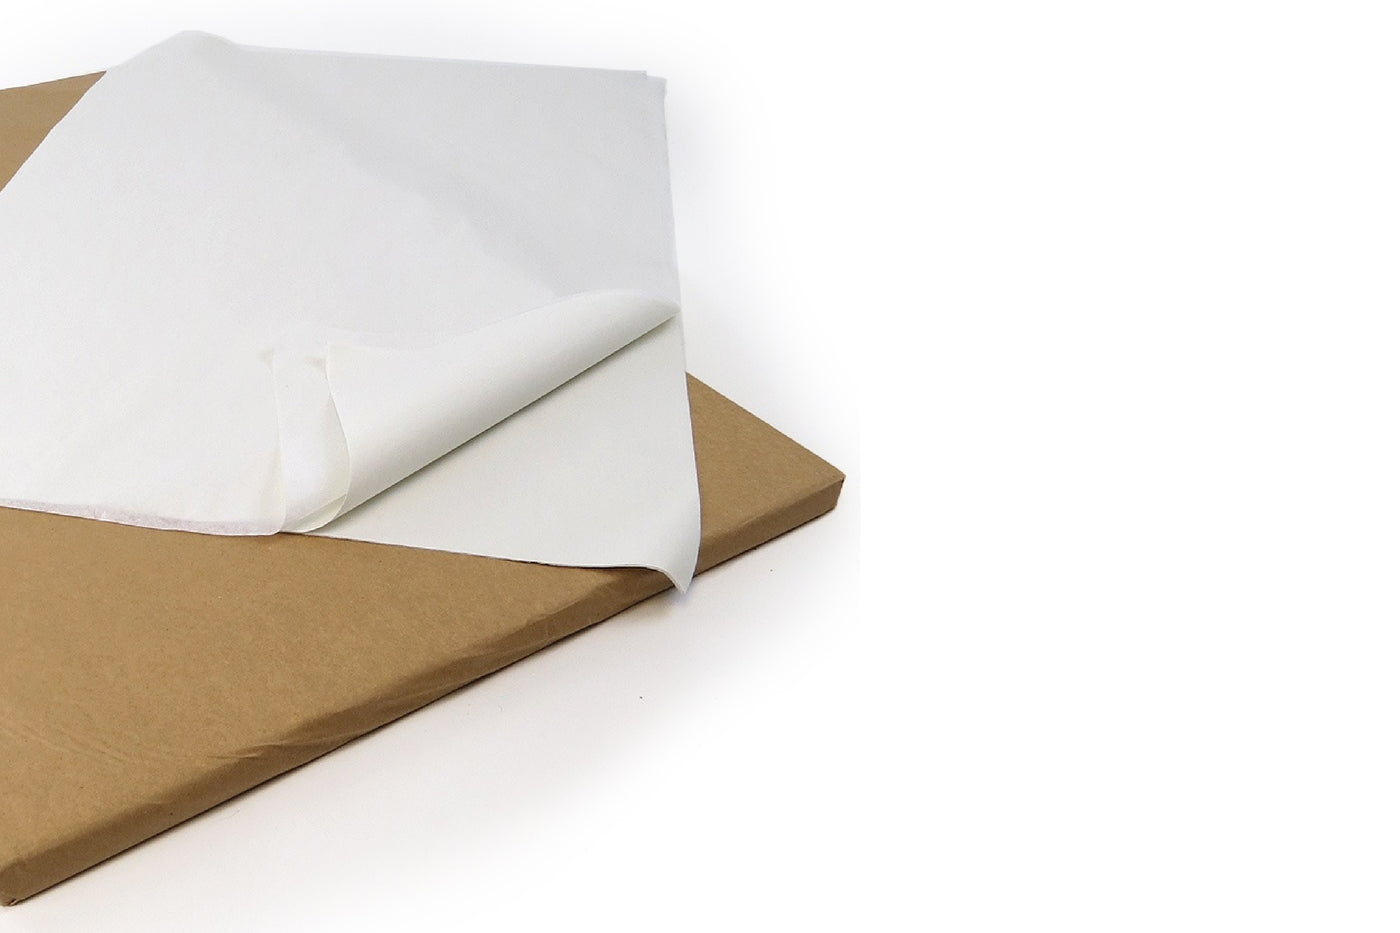 Tissue Acid Free White – Hardy Packaging Ltd